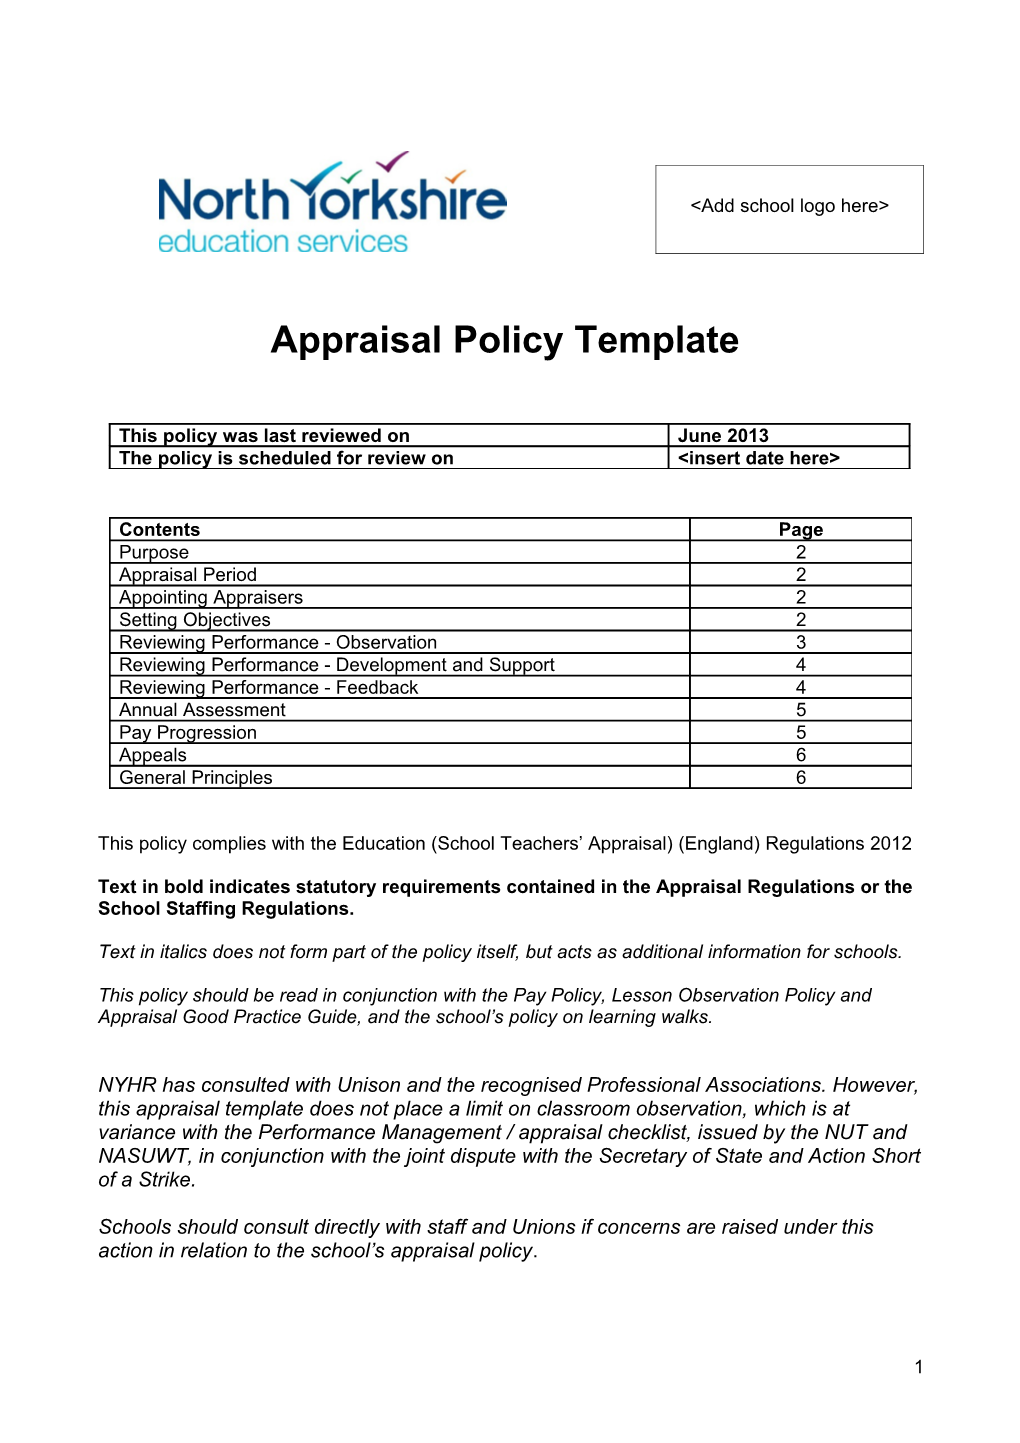 Appraisal Policy - Schools